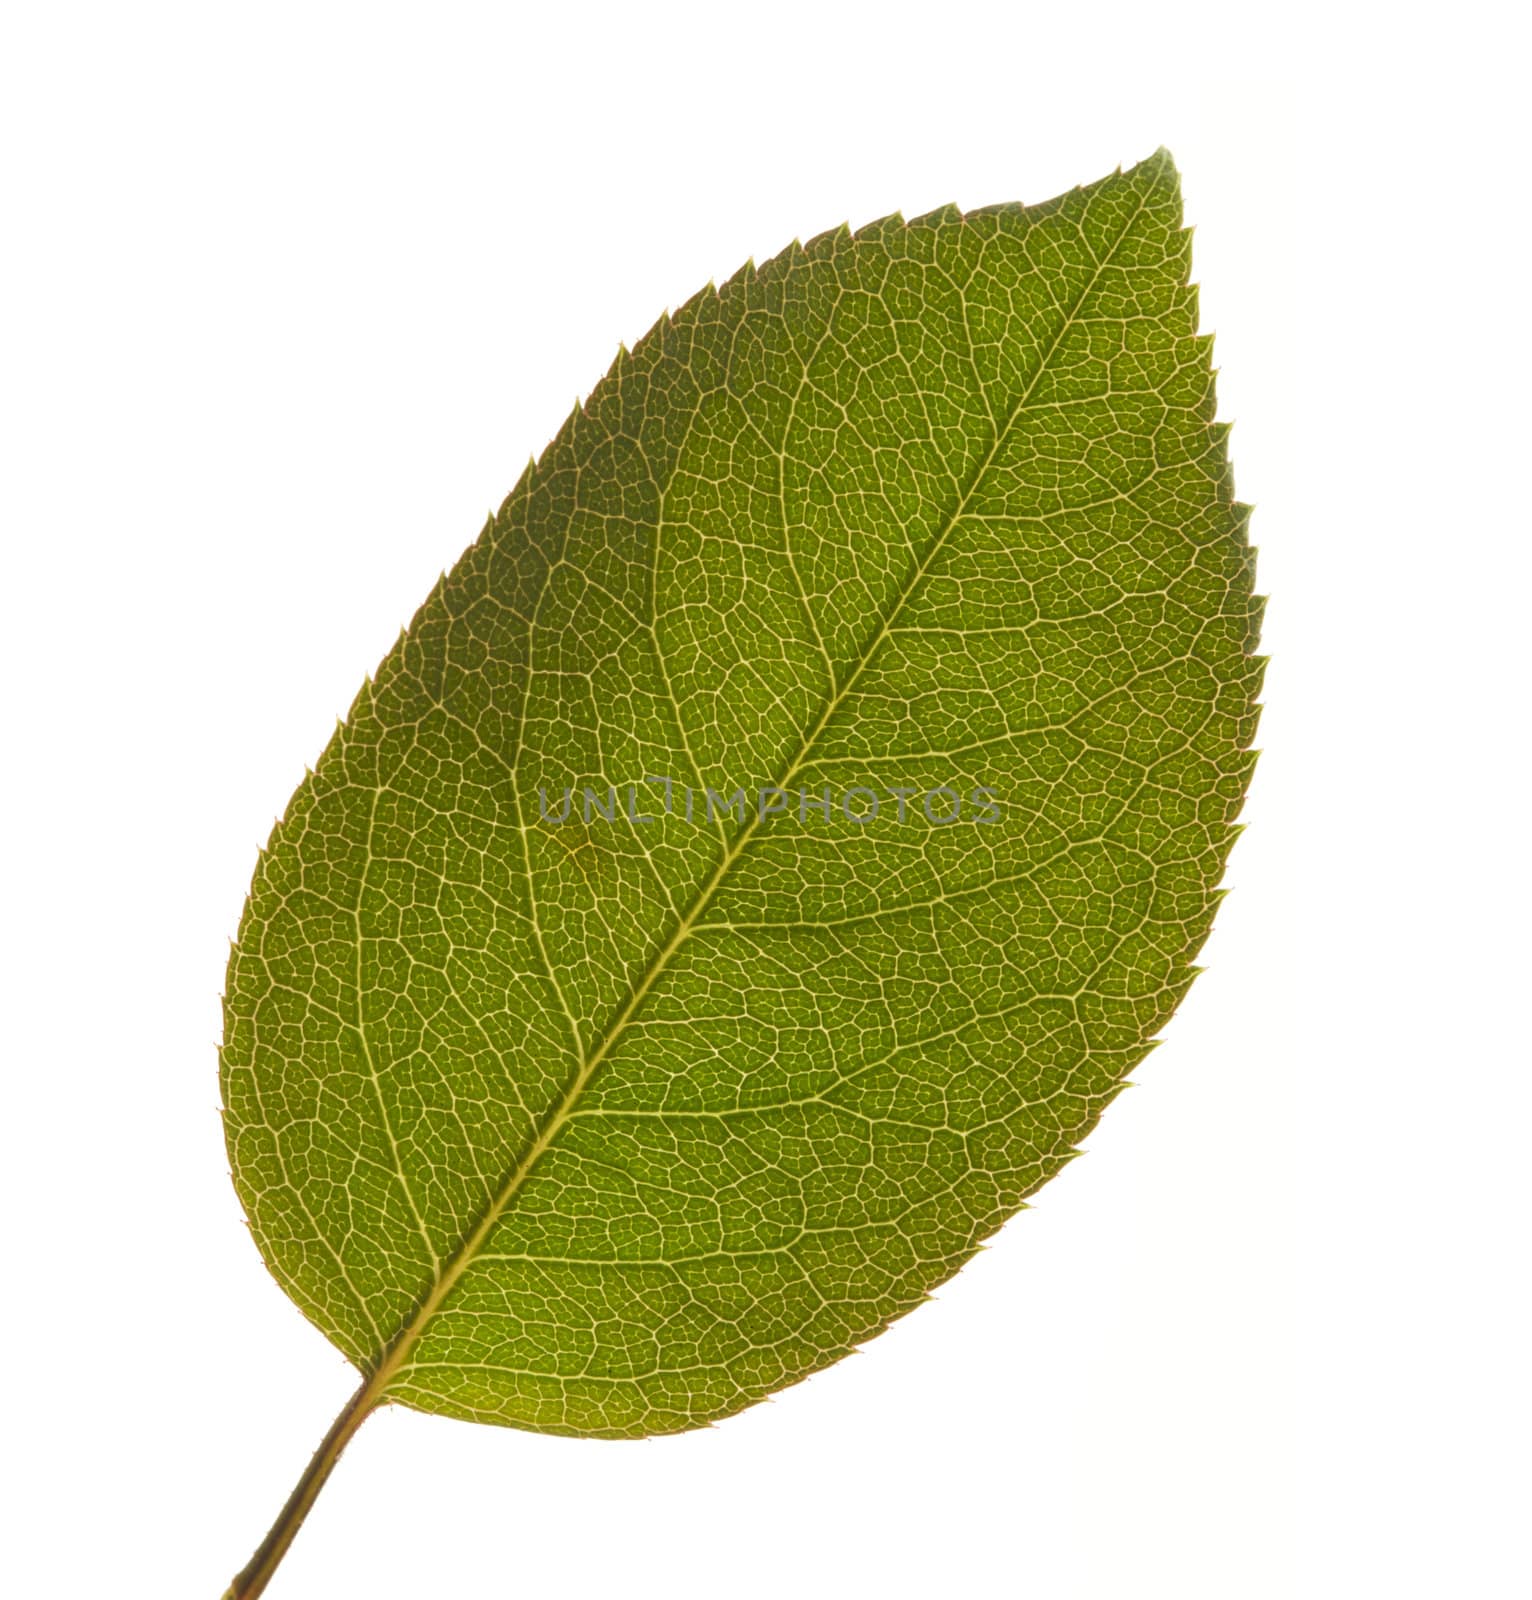 Leaf Macro Isolated on a White Background.